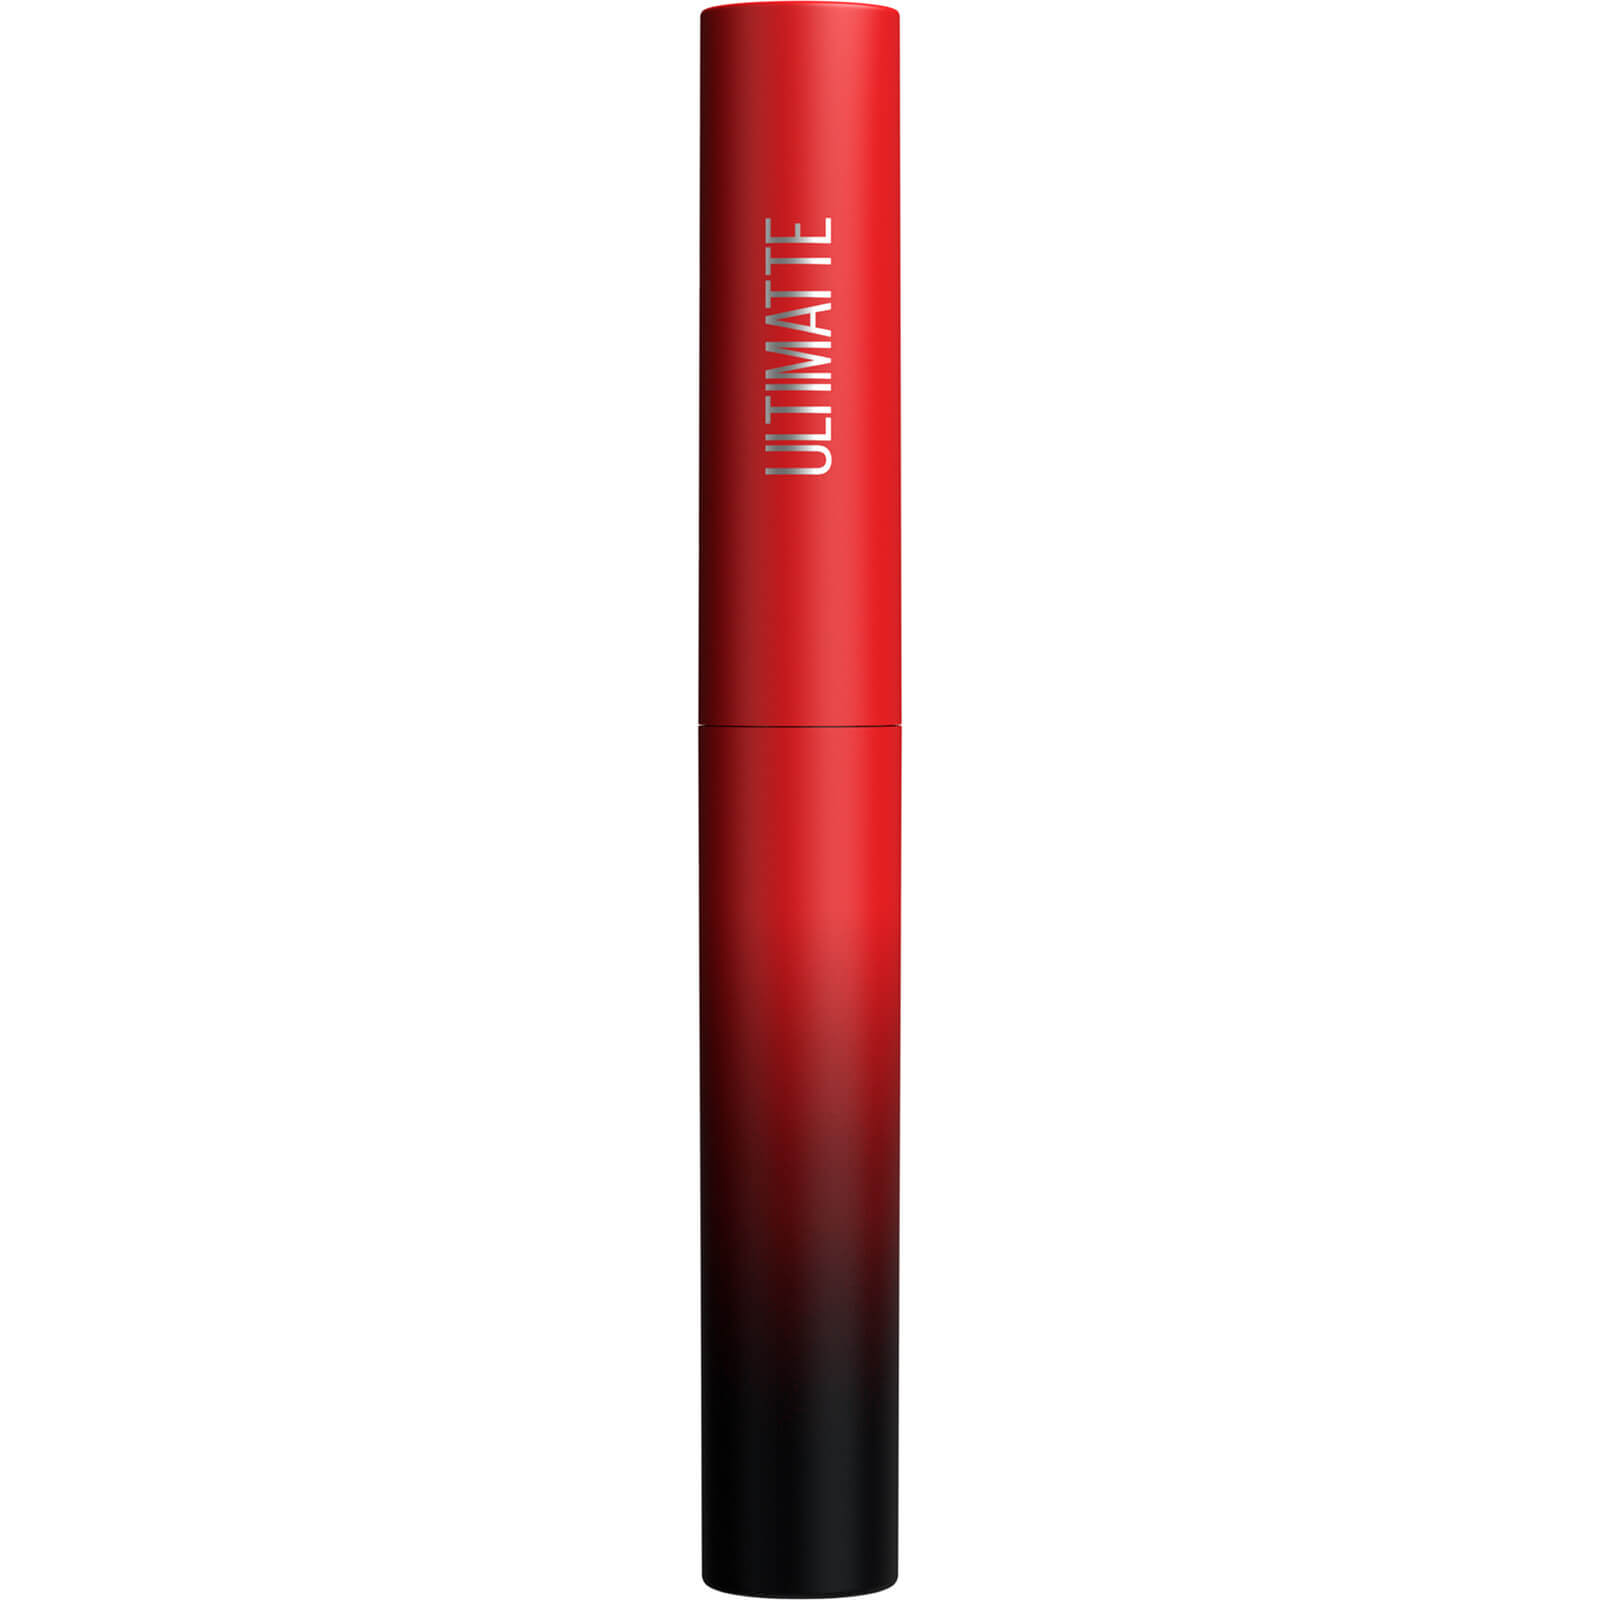 Maybelline Colour Sensational Ultimatte Slim Lipstick 25g (Various Shades) - More Ruby